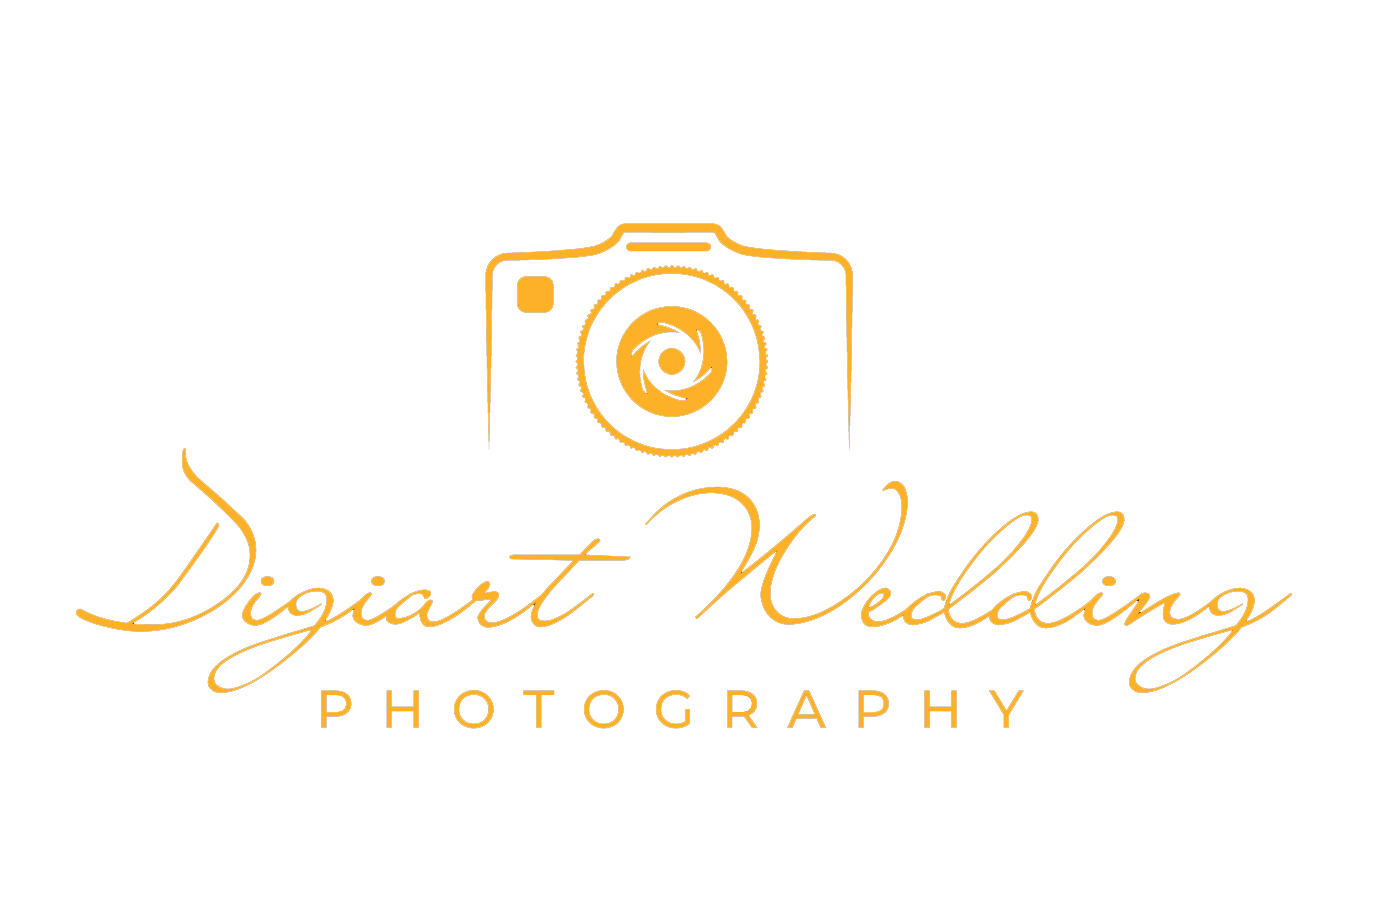 digiart wedding photography logo in hd